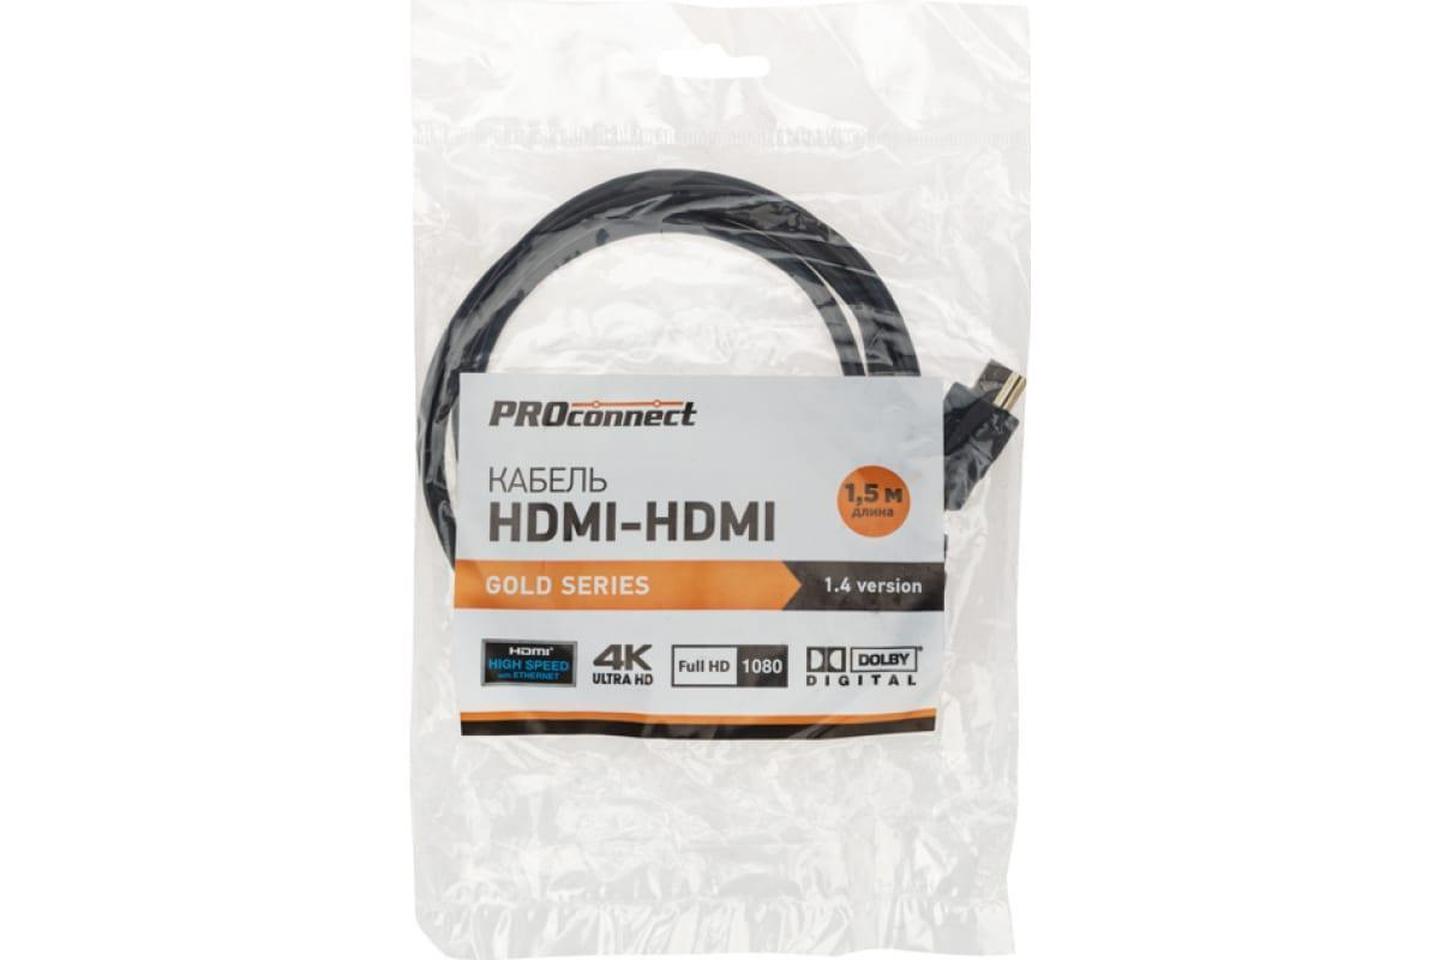 17-6203-6, Кабель HDMI - HDMI 1.4, 1.5м Gold